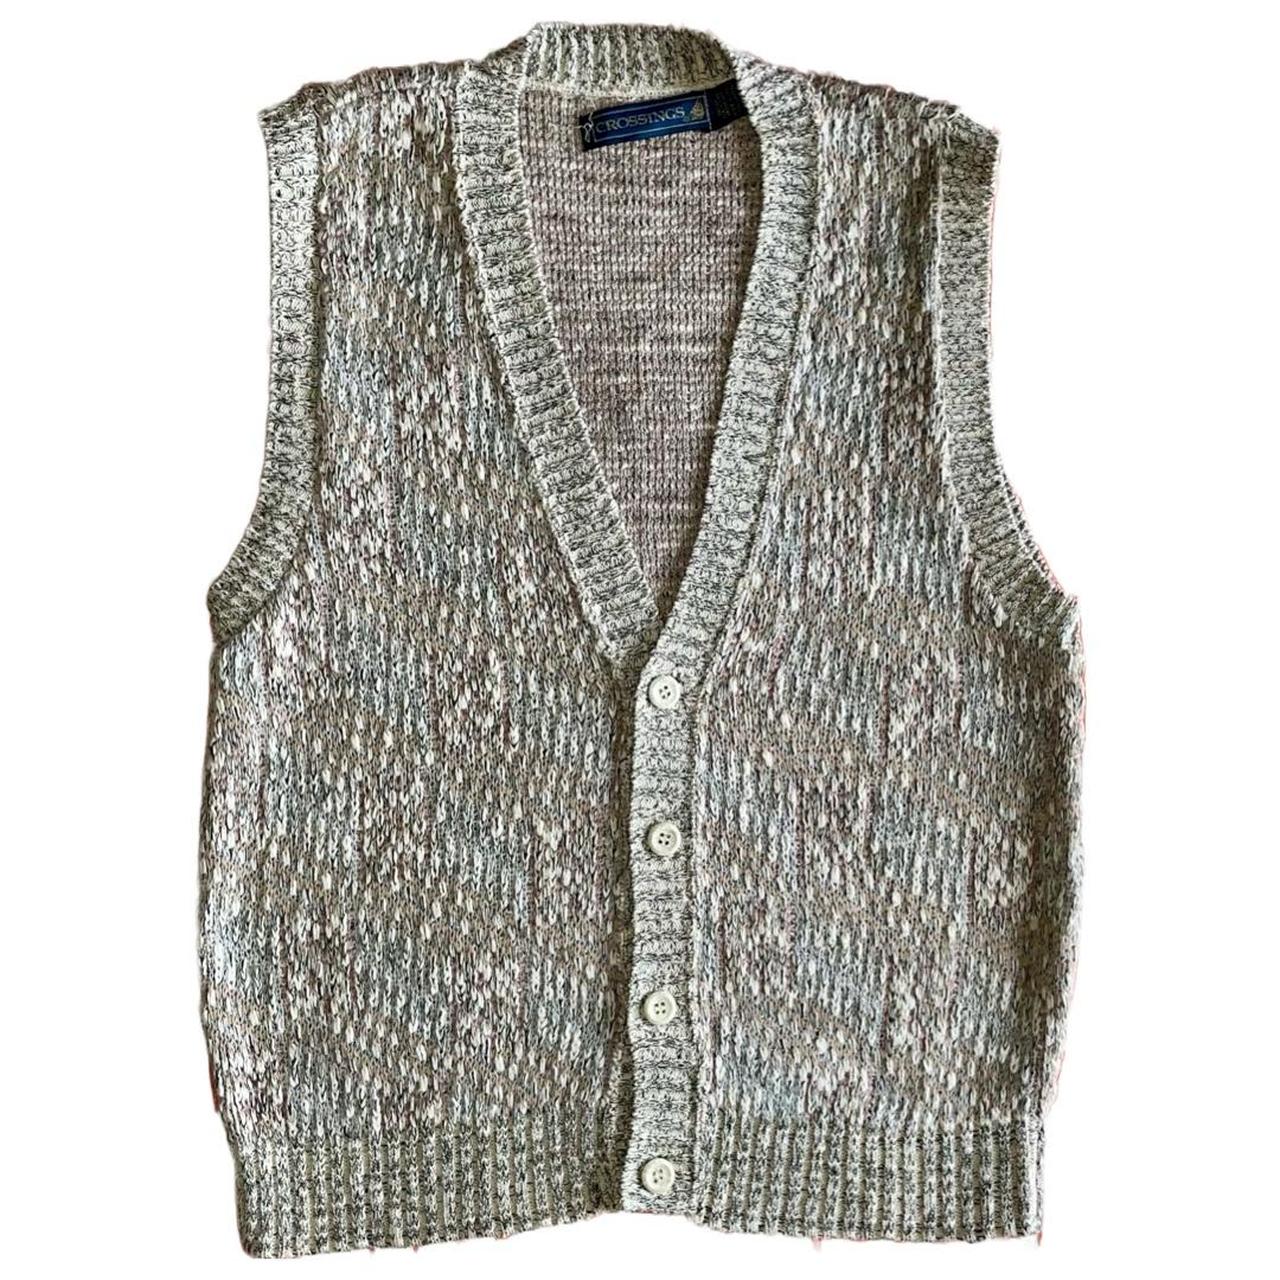 80s Beige Knit Cardigan Vest Size Medium Excellent... - Depop